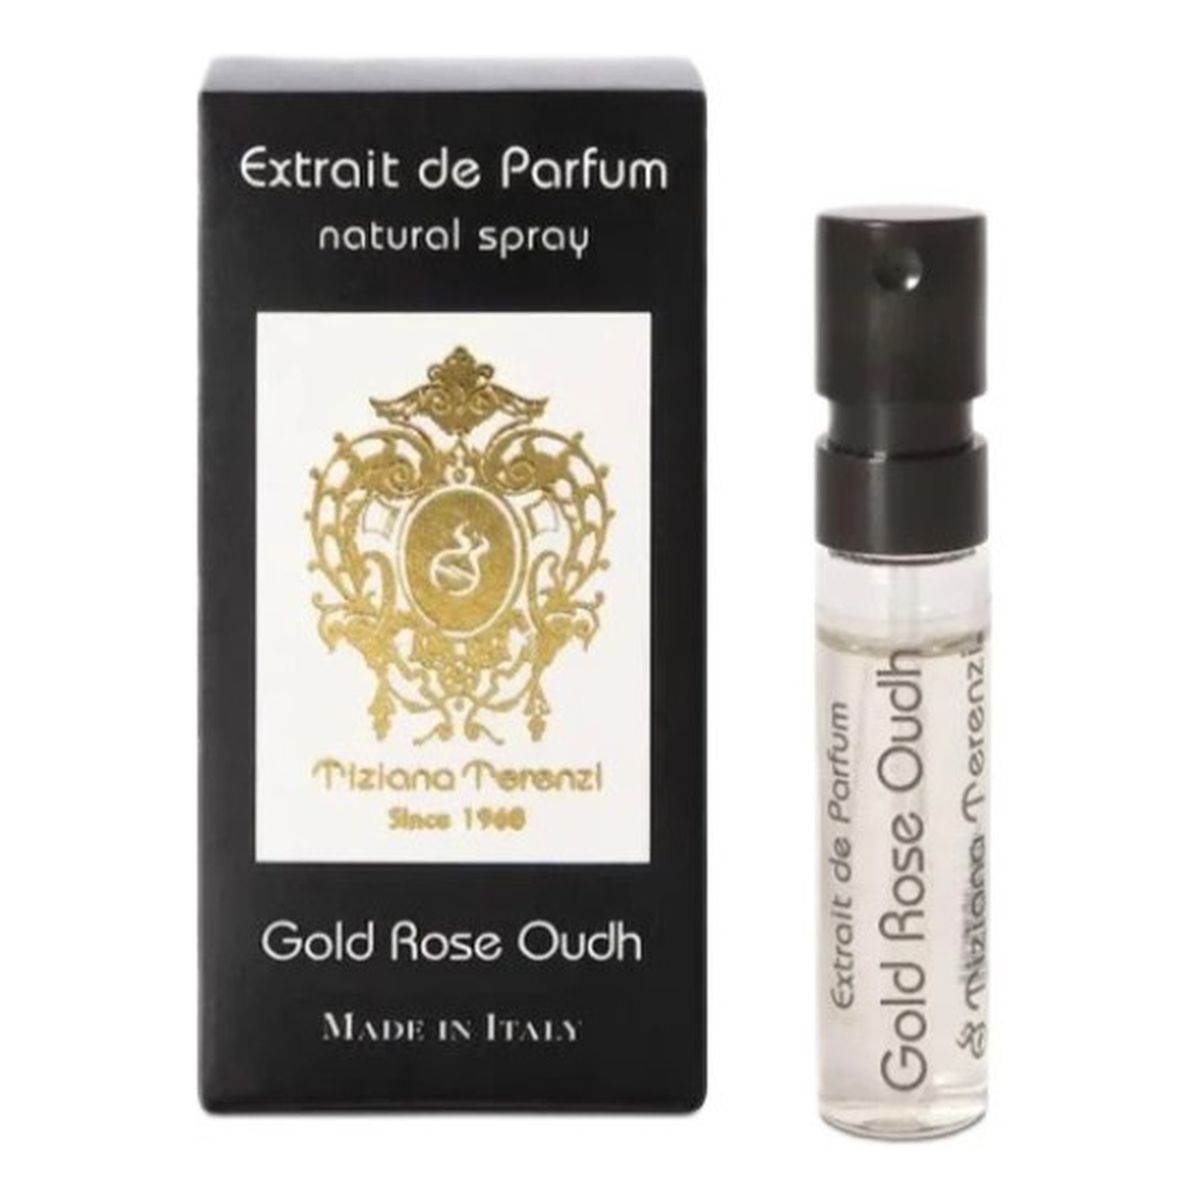 Tiziana Terenzi Gold rose oudh esencja perfum spray próbka 1,5 ml 1.5ml